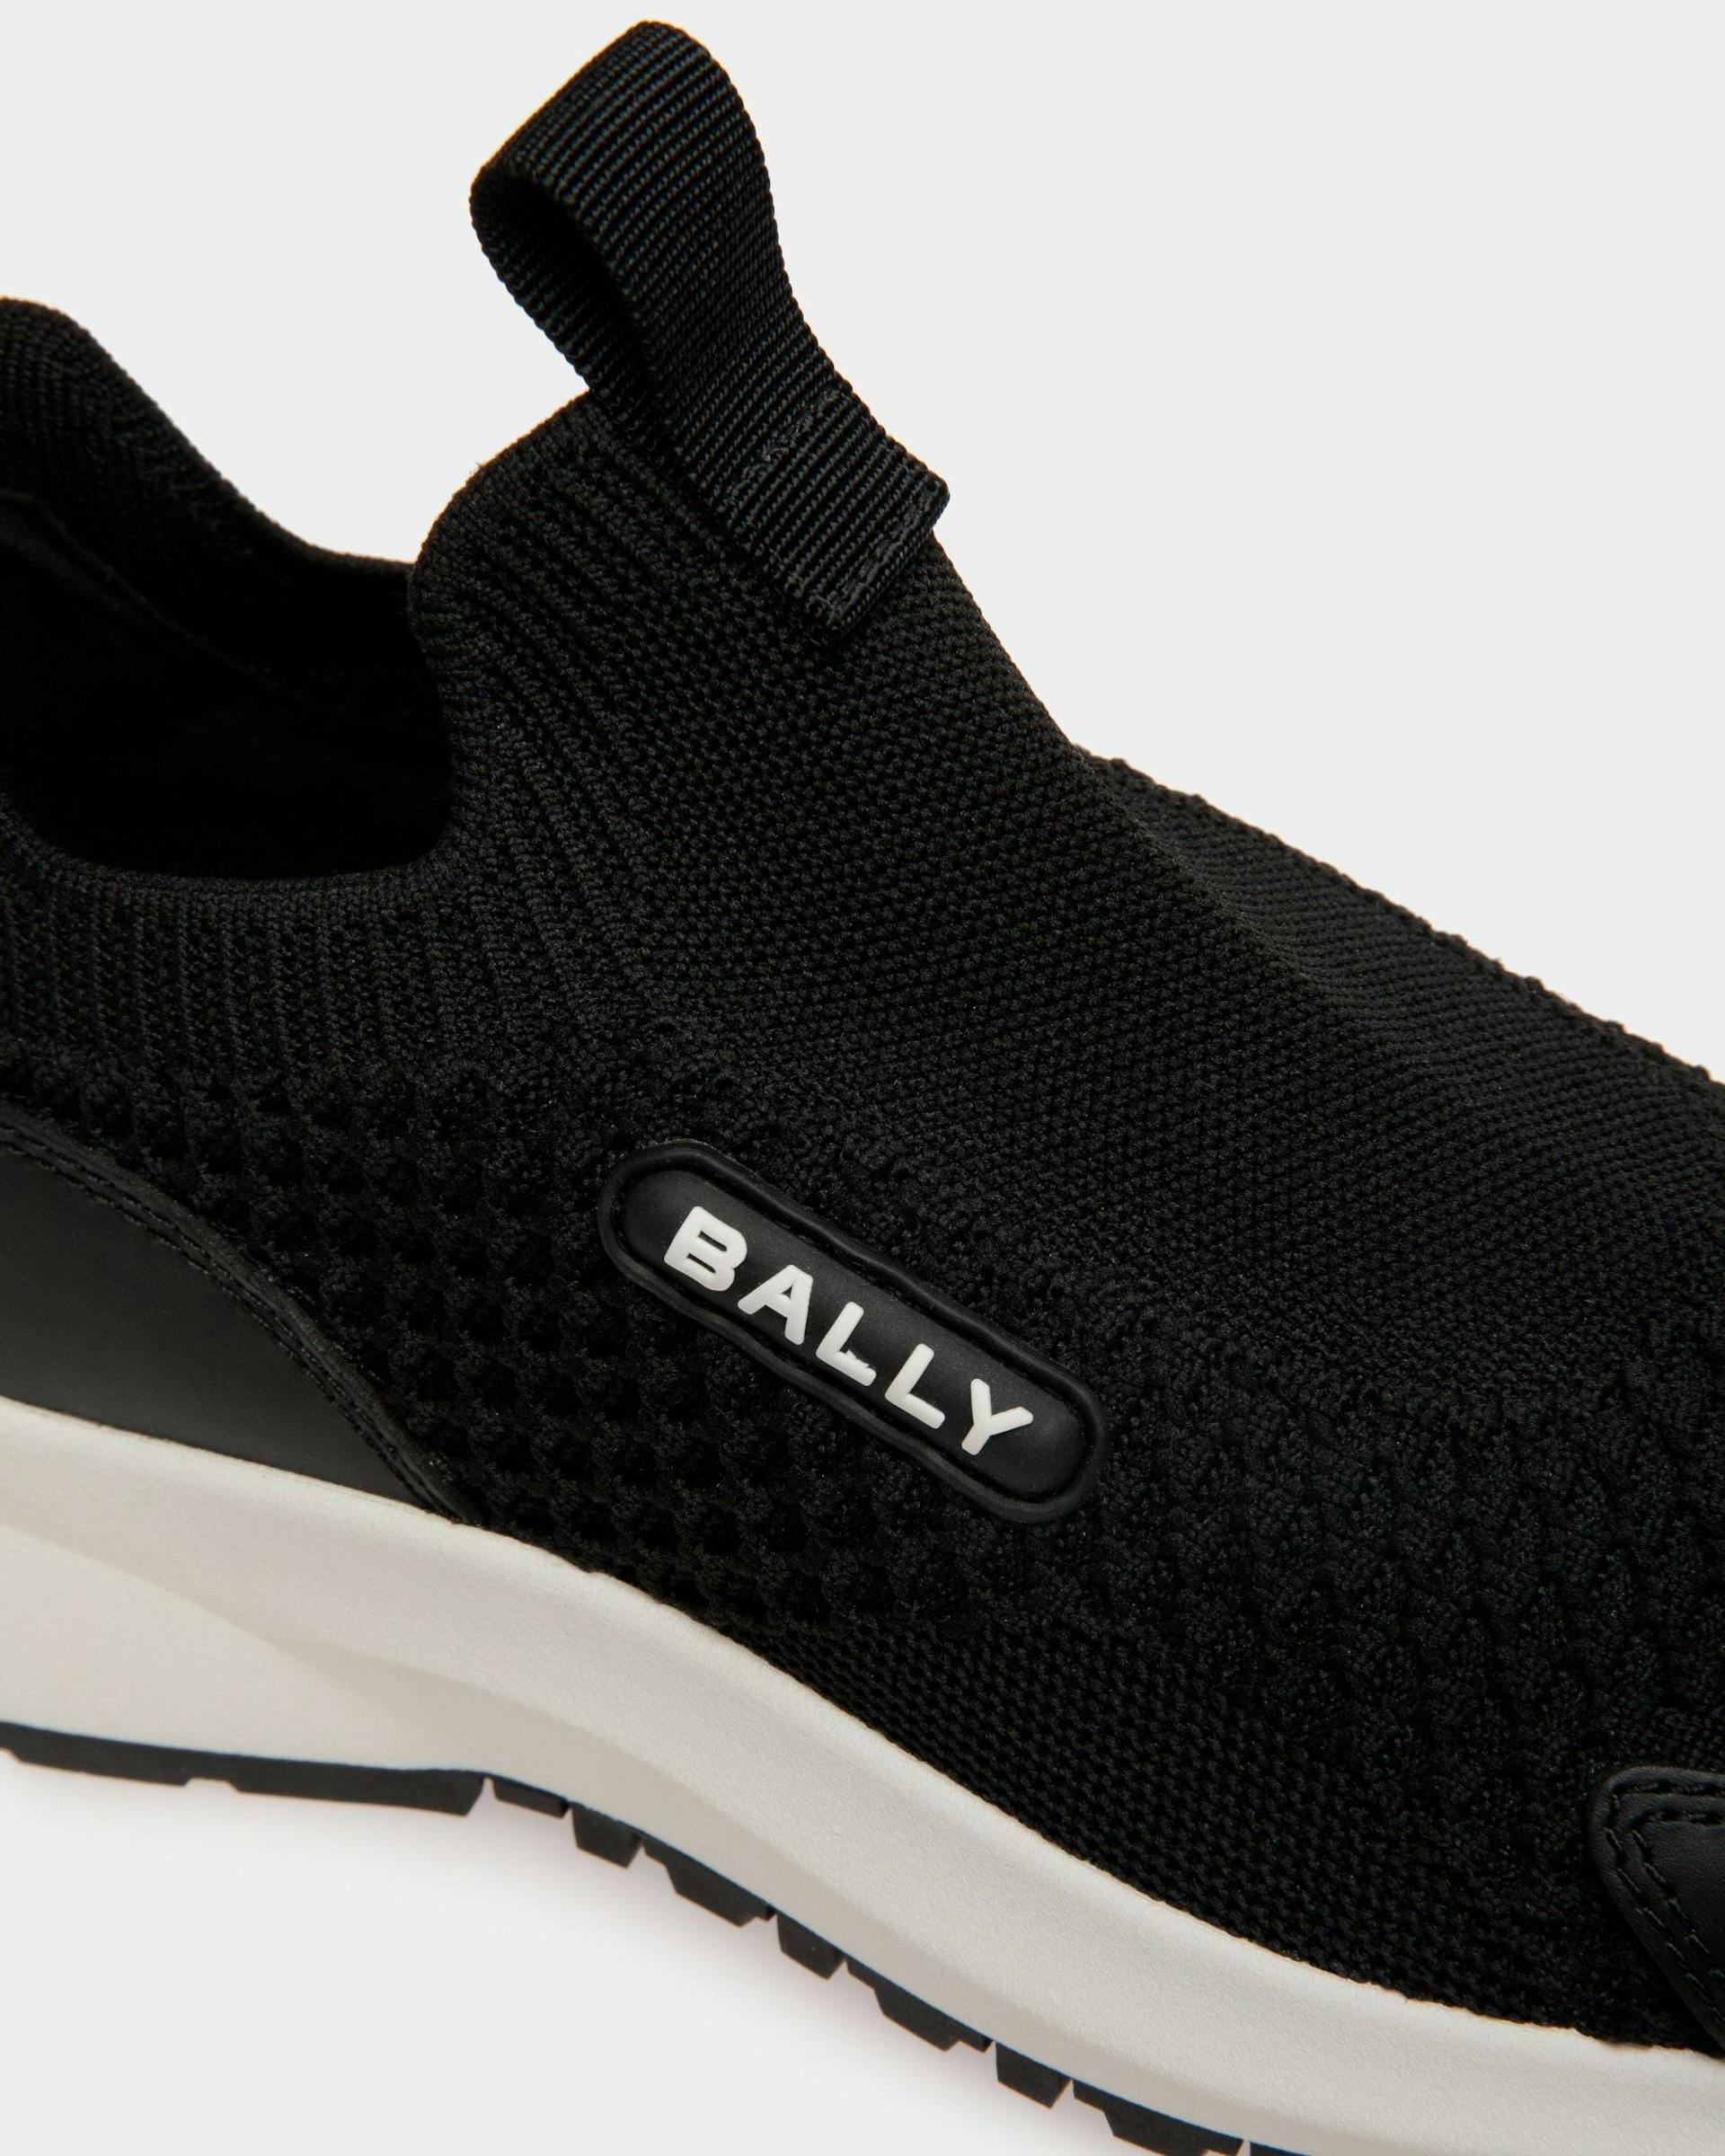 Women's Outline Sneaker in Black Knit Fabric | Bally | Still Life Detail